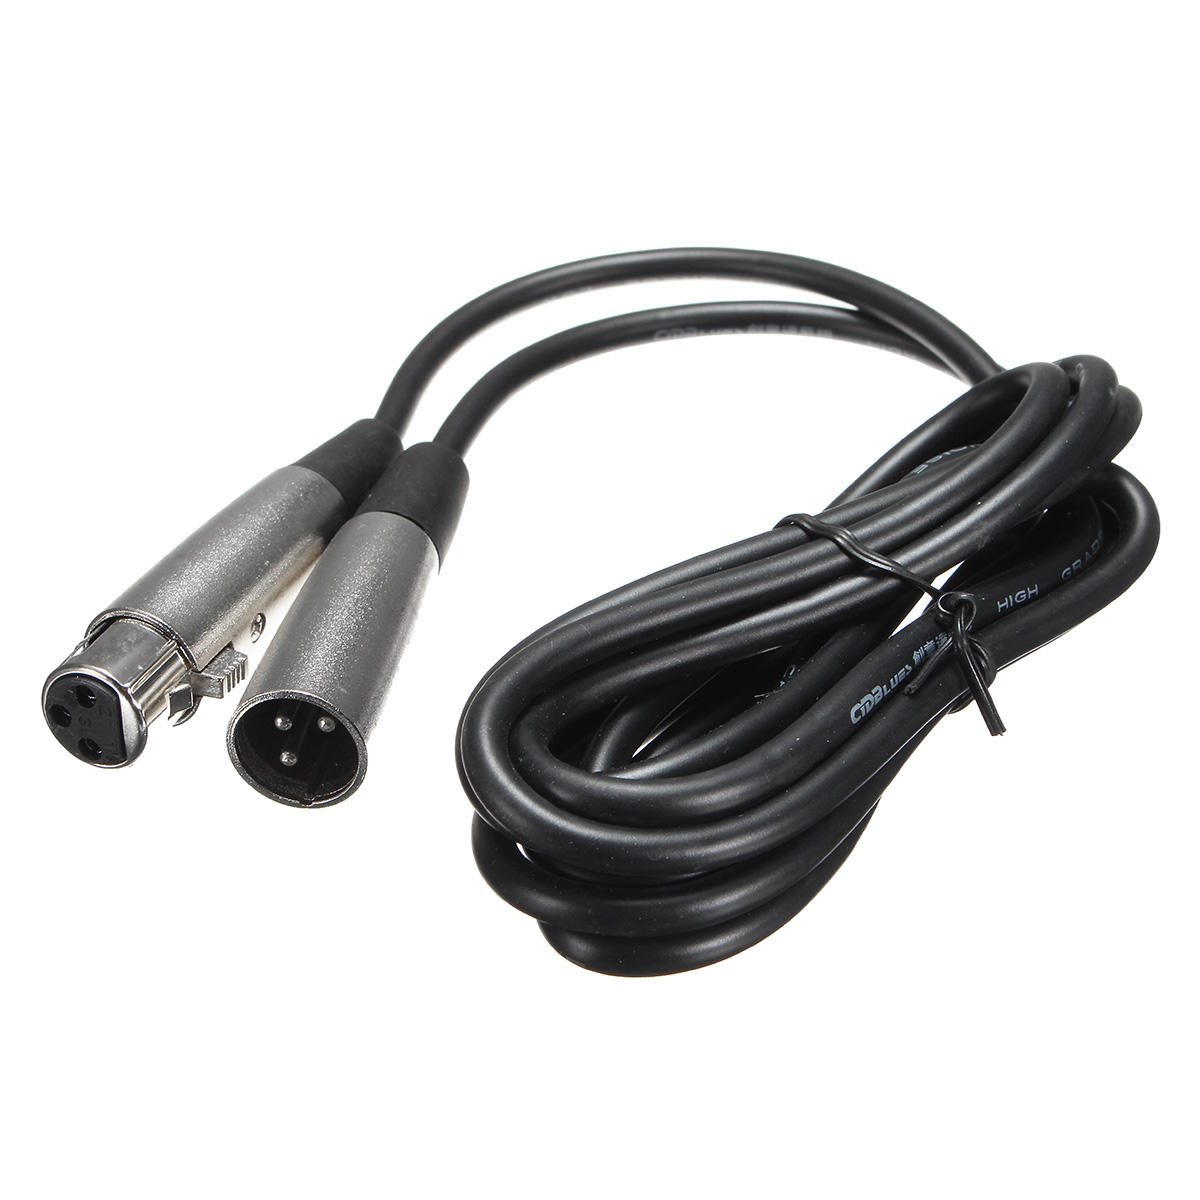 Cable de audio XLR para fuente de alimentación Phantom Micrófono